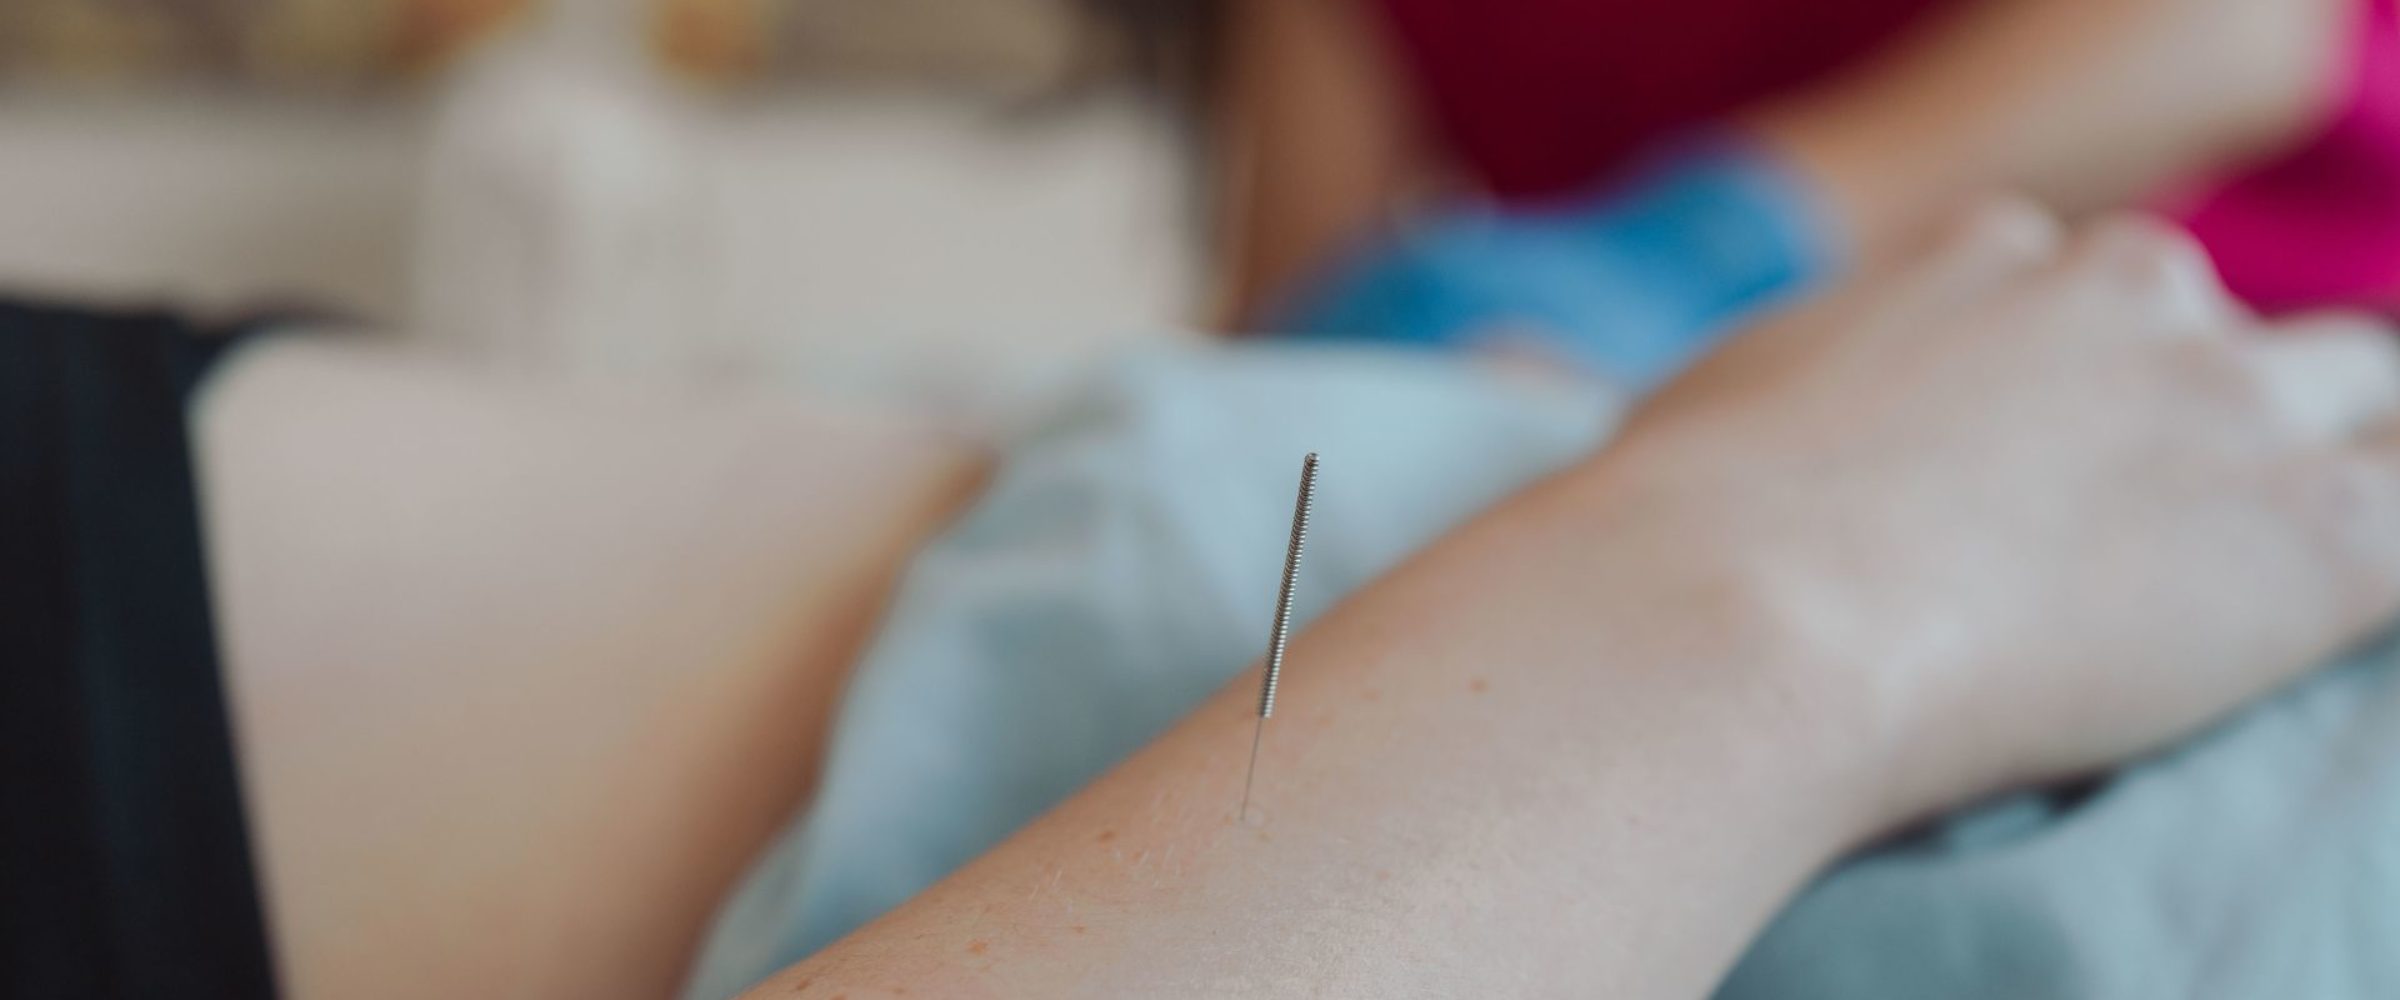 acupuncture needle up close